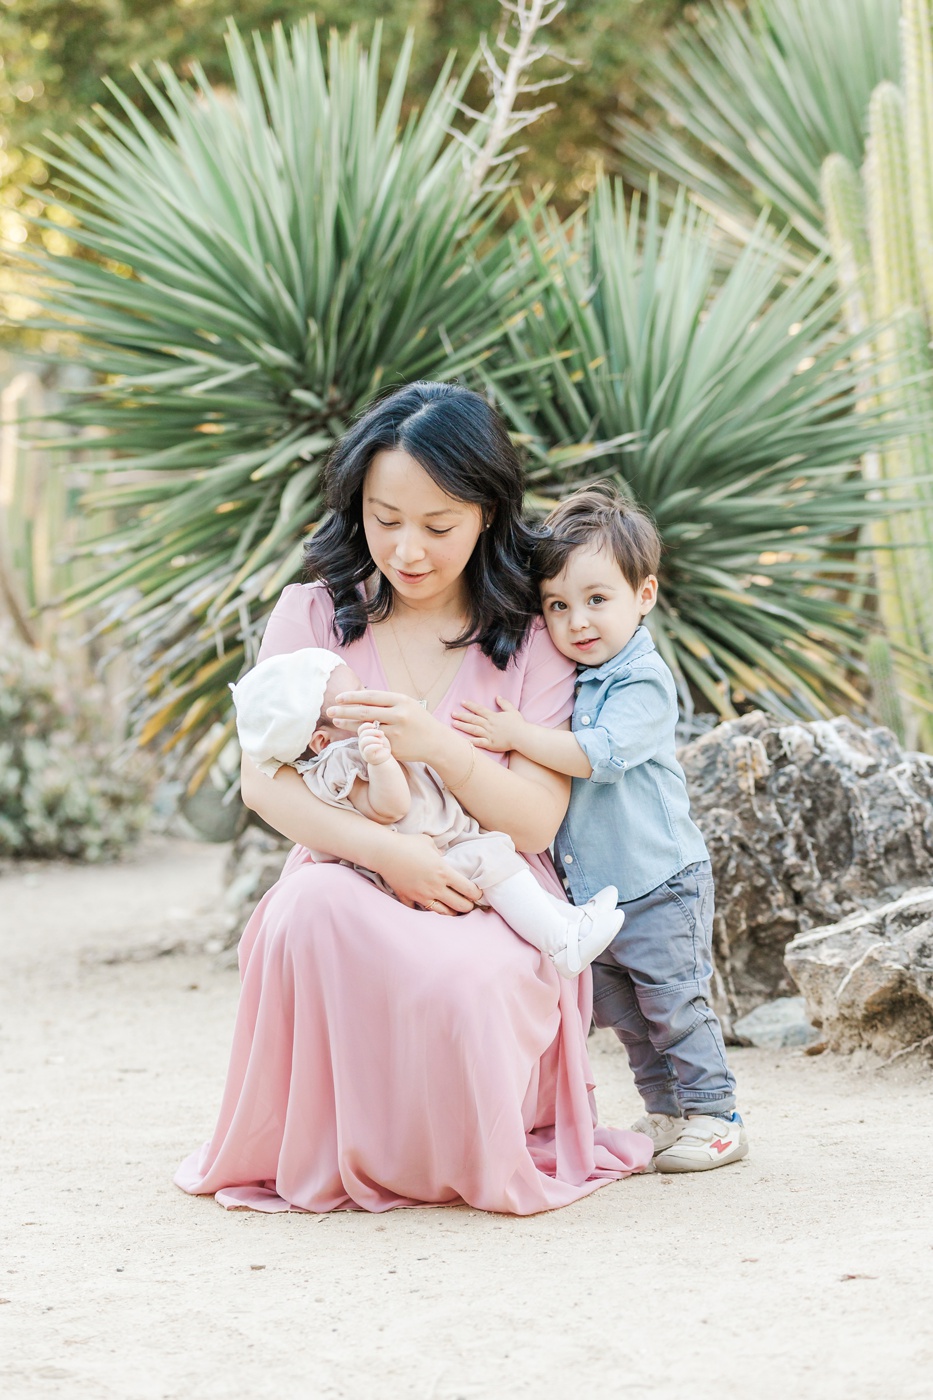 Family photo with newborn in Arizona Cactus Garden